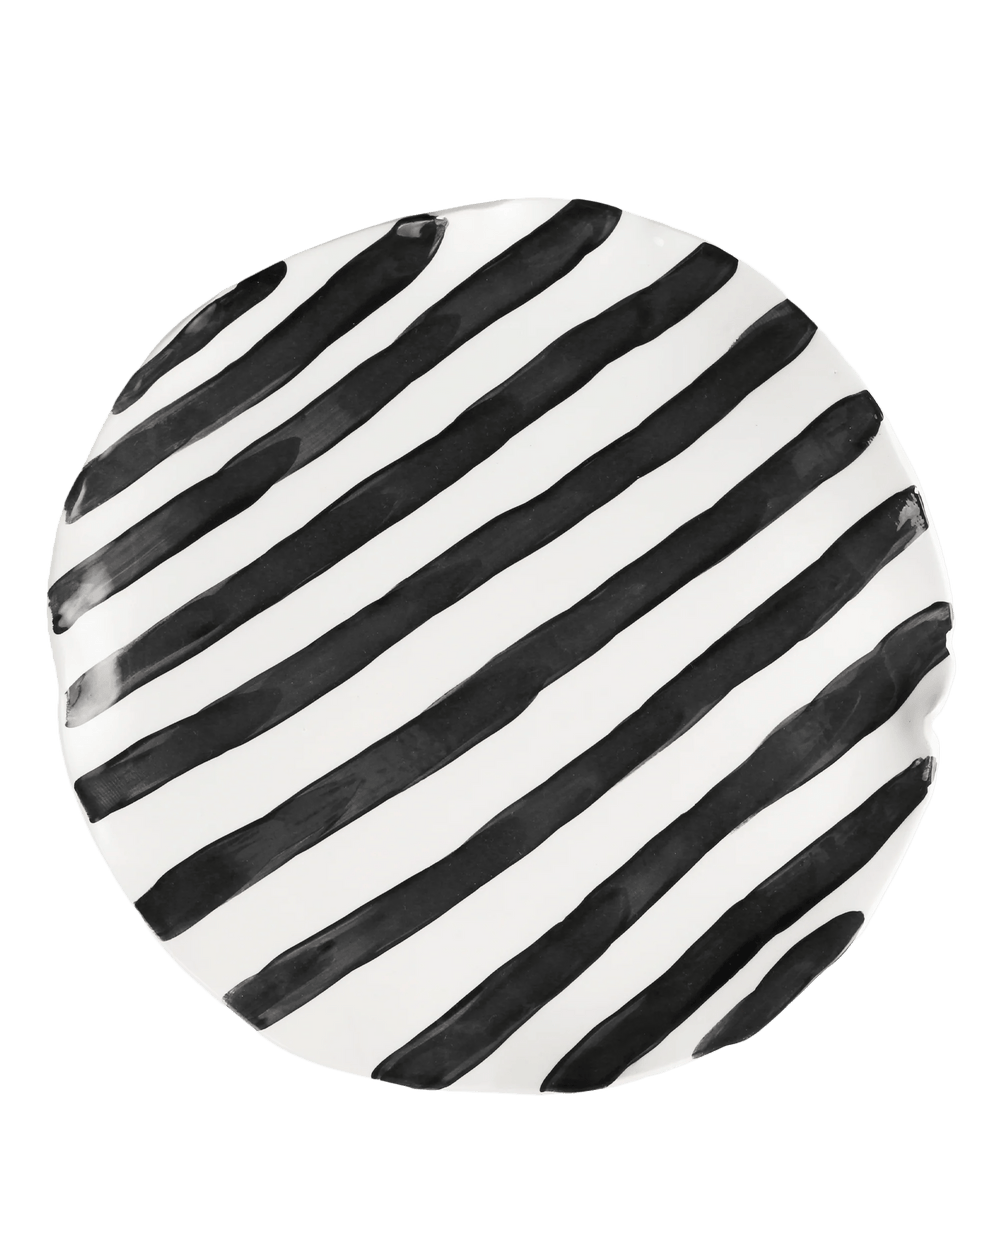 Black Striped Plate